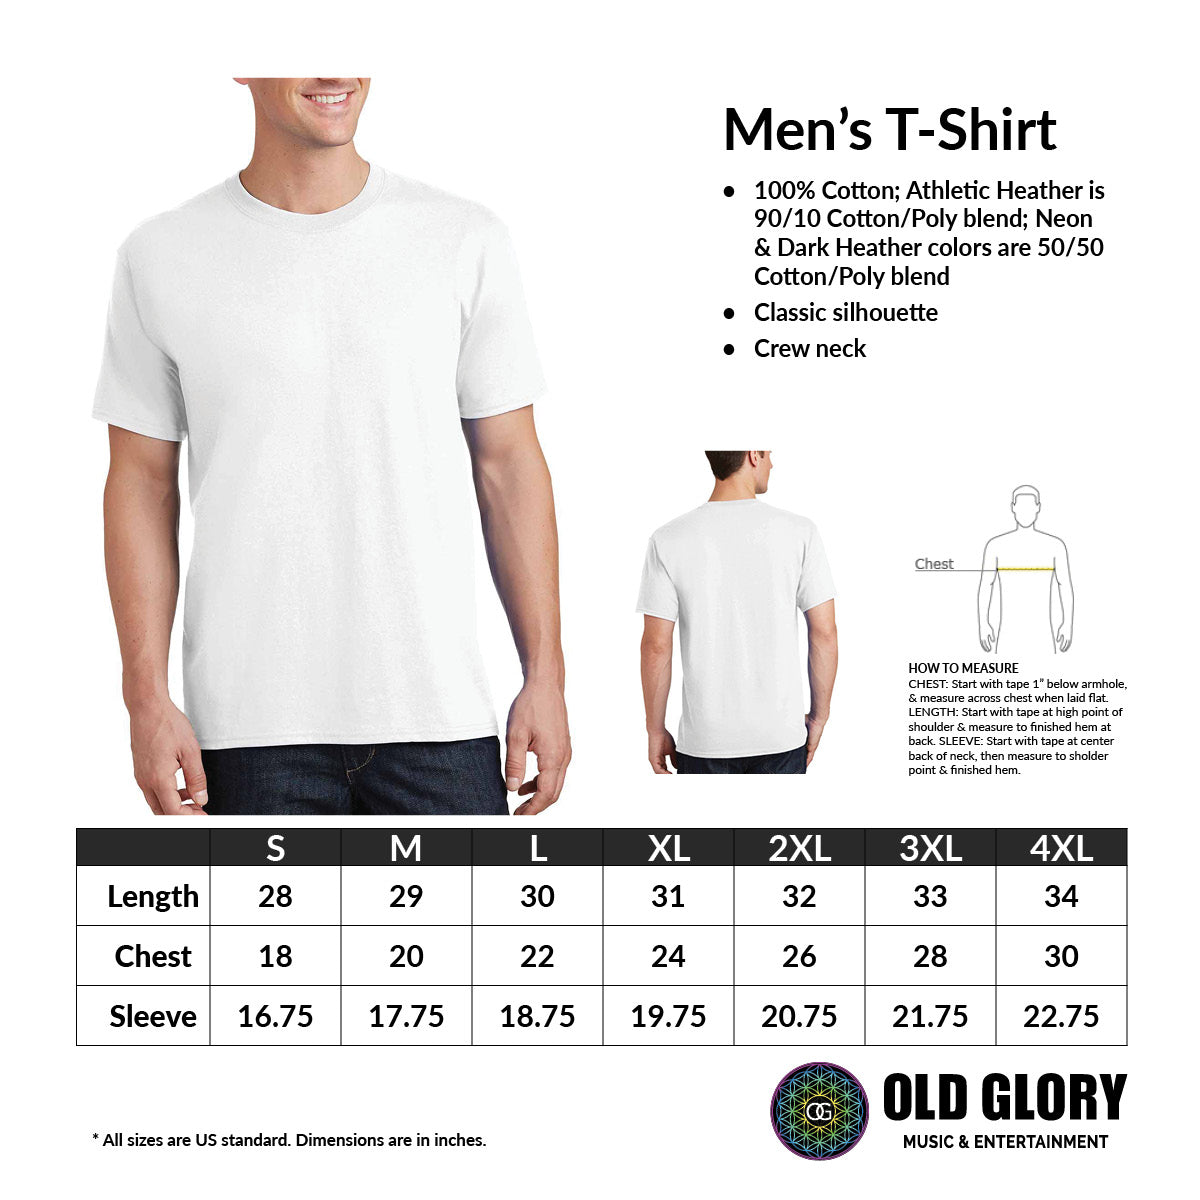 Men's Pro Standard Royal/Red Texas Rangers Taping T-Shirt Size: Large